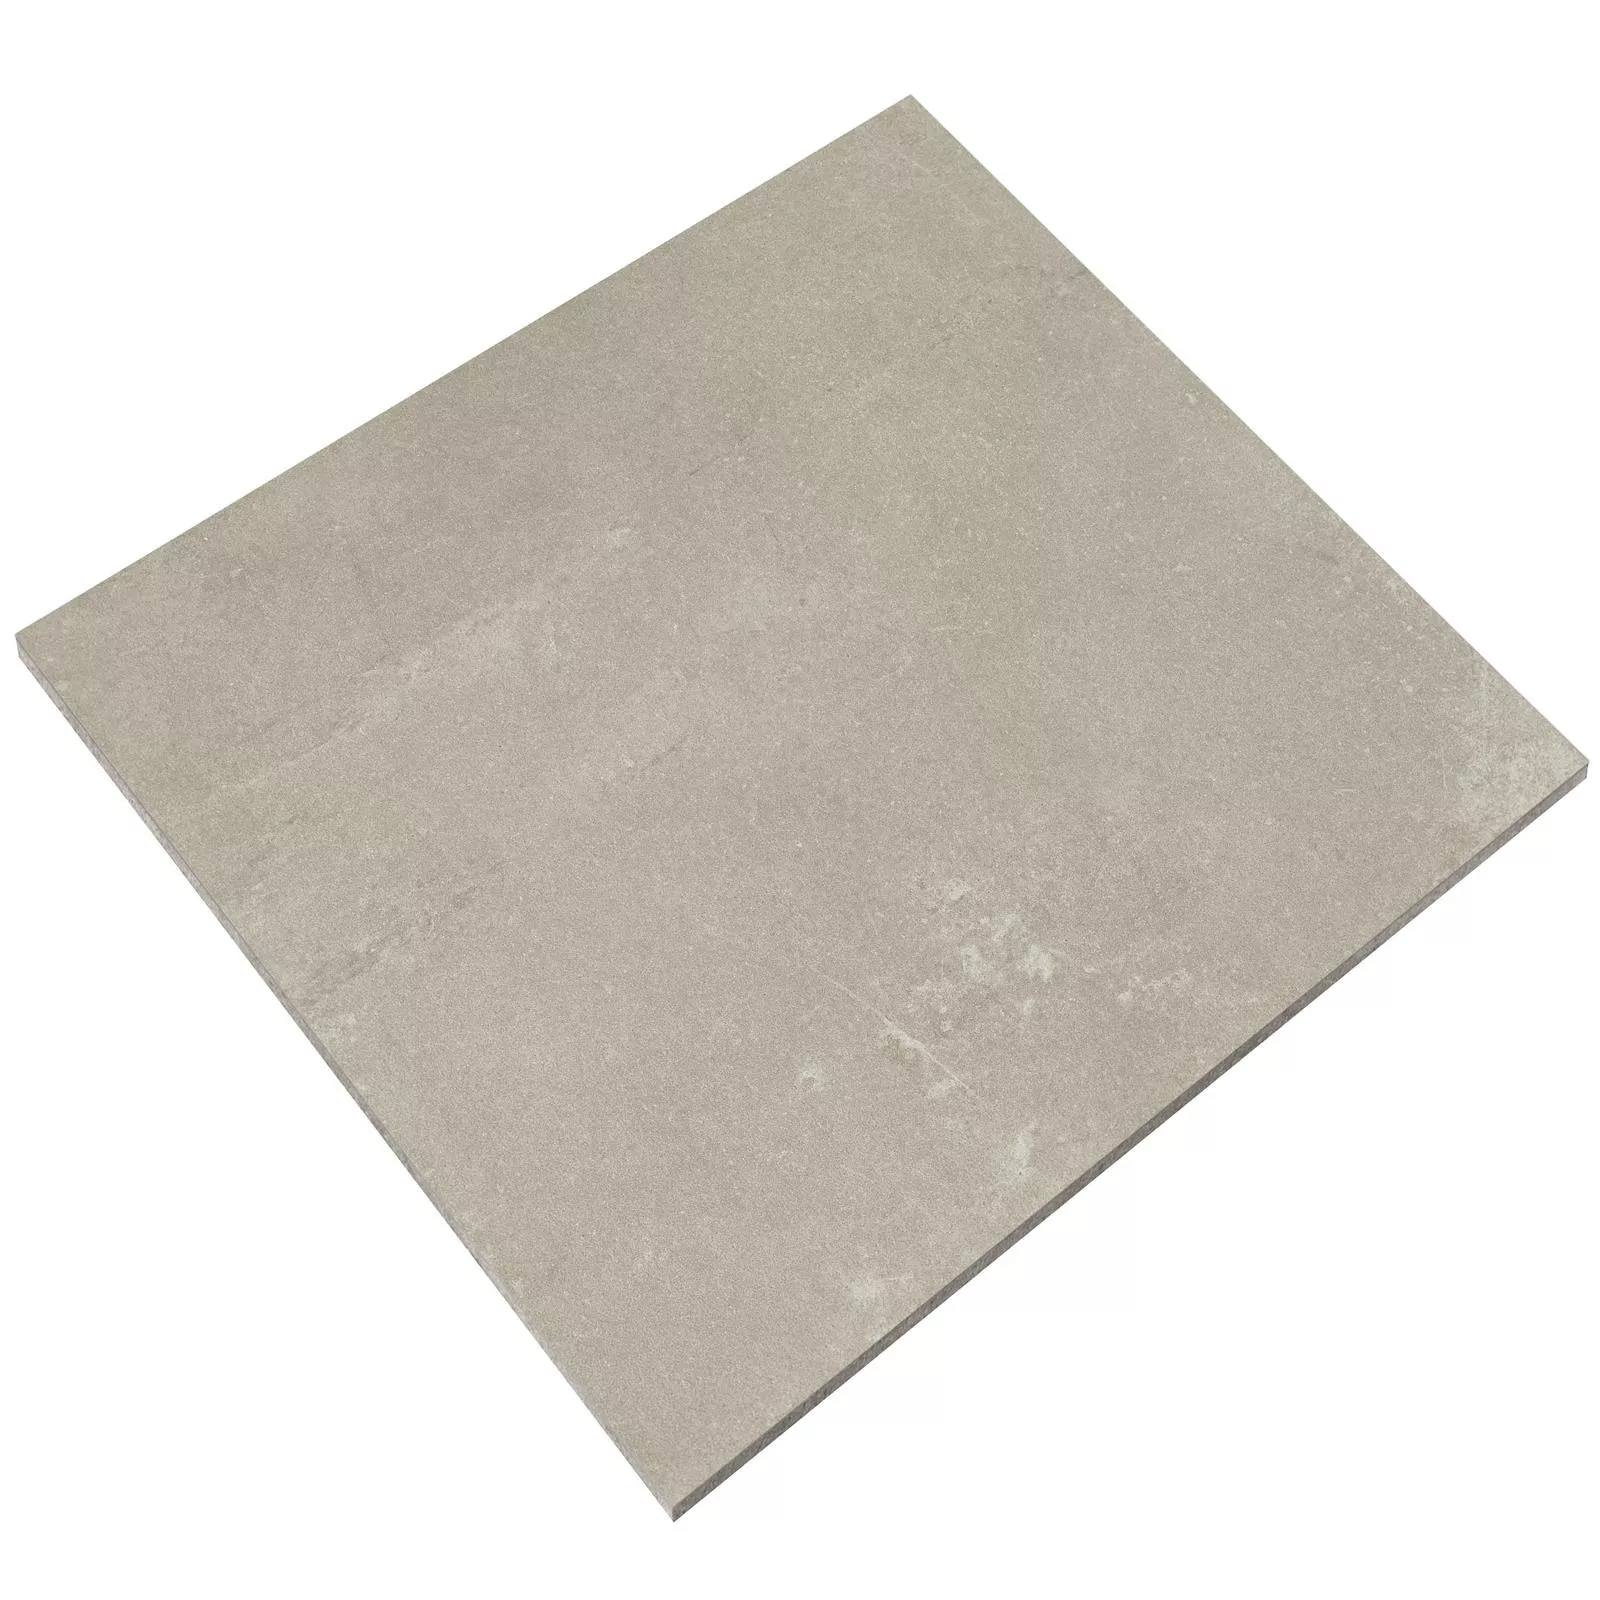 Podlahové Dlaždice Cementový Vzhled Nepal Slim Béžová 60x60cm